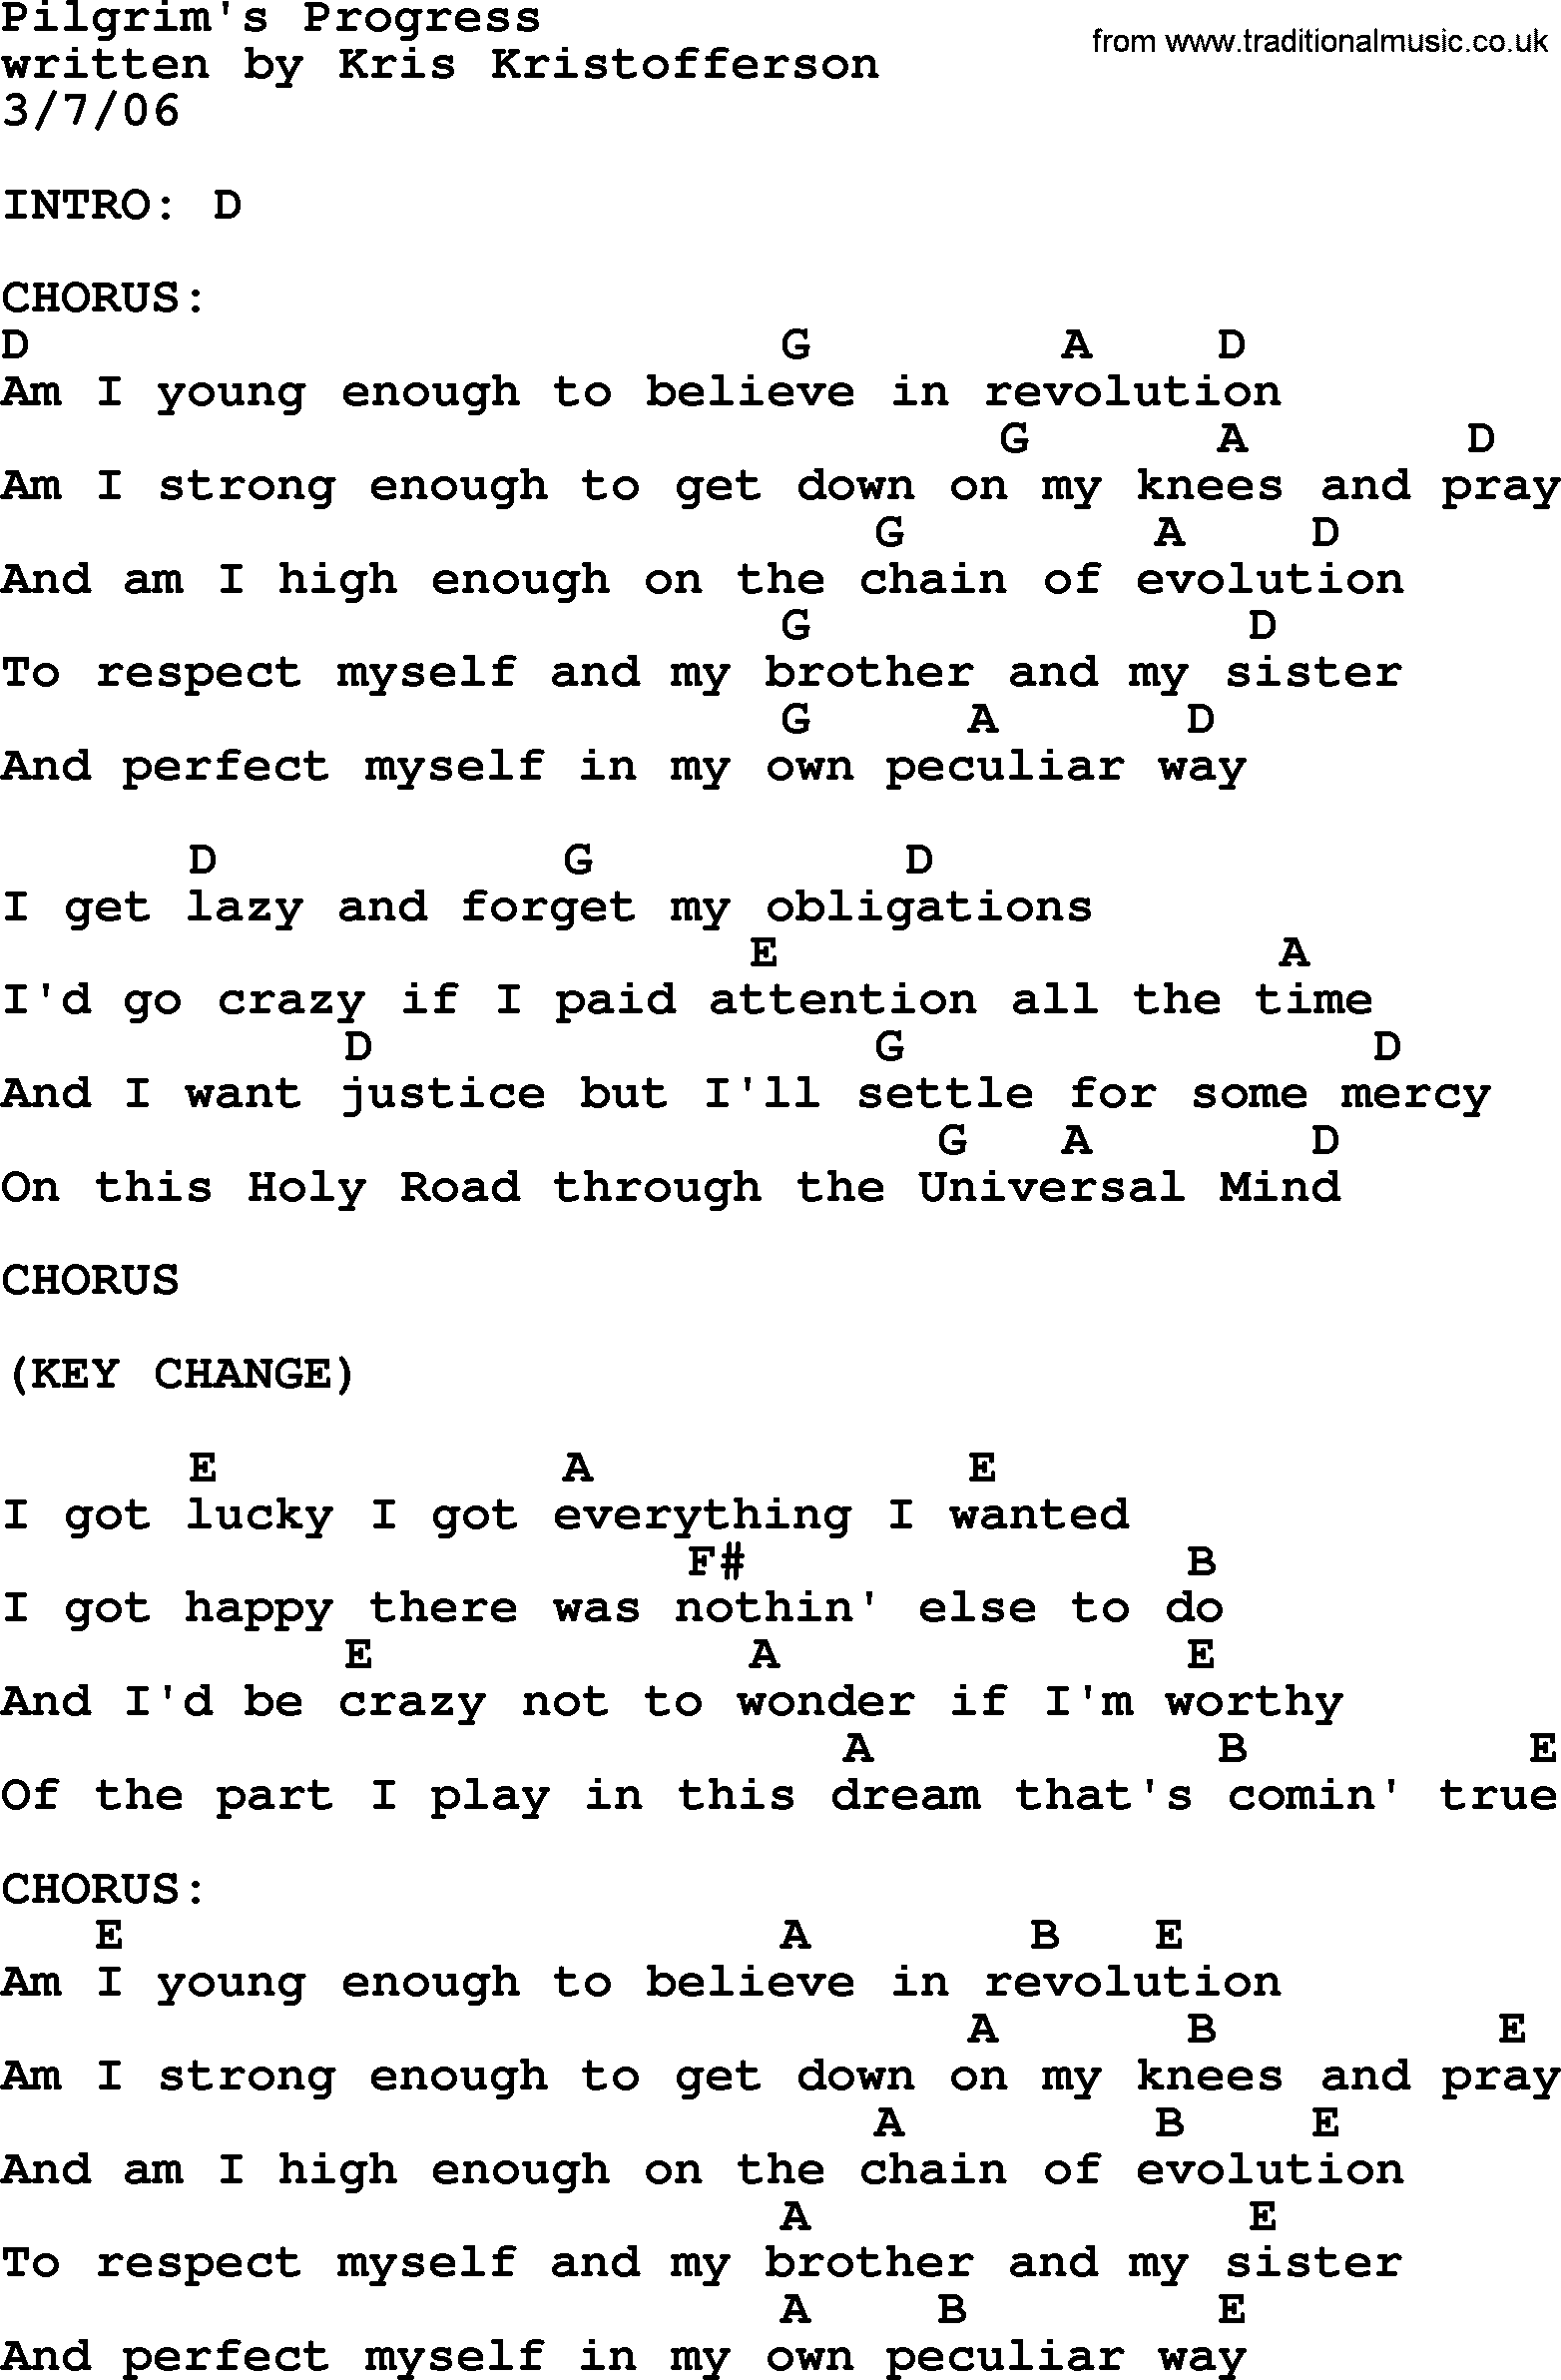 Kris Kristofferson song: Pilgrim's Progress lyrics and chords